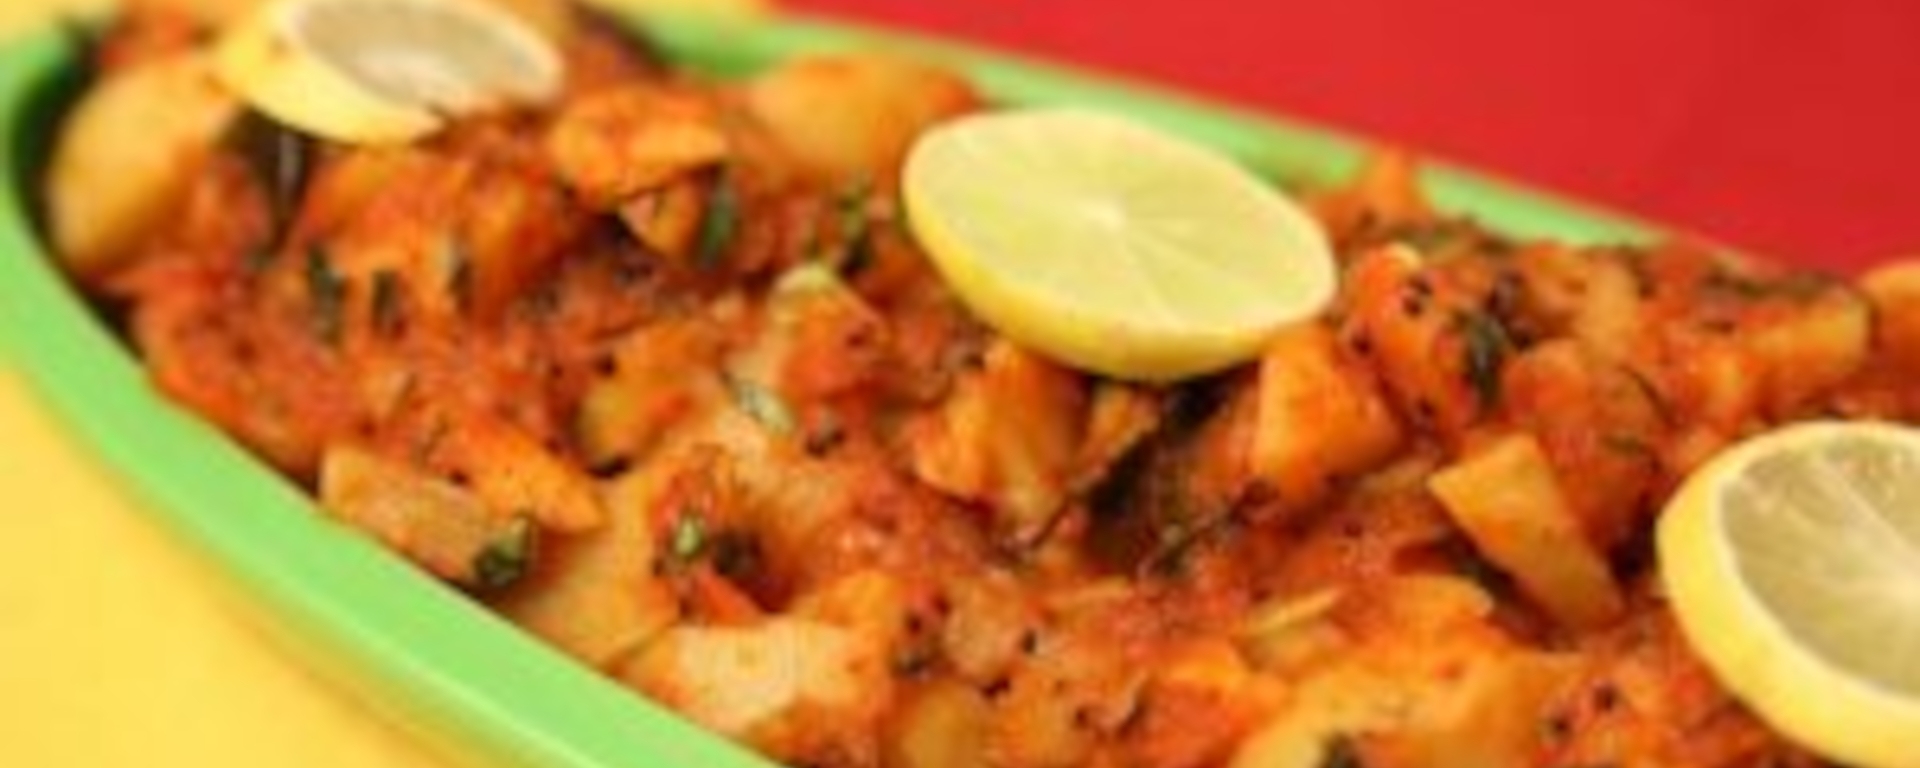 LuvMyRecipe.com - Lasooni Aloo: Indian Garlic Potato Curry Featured